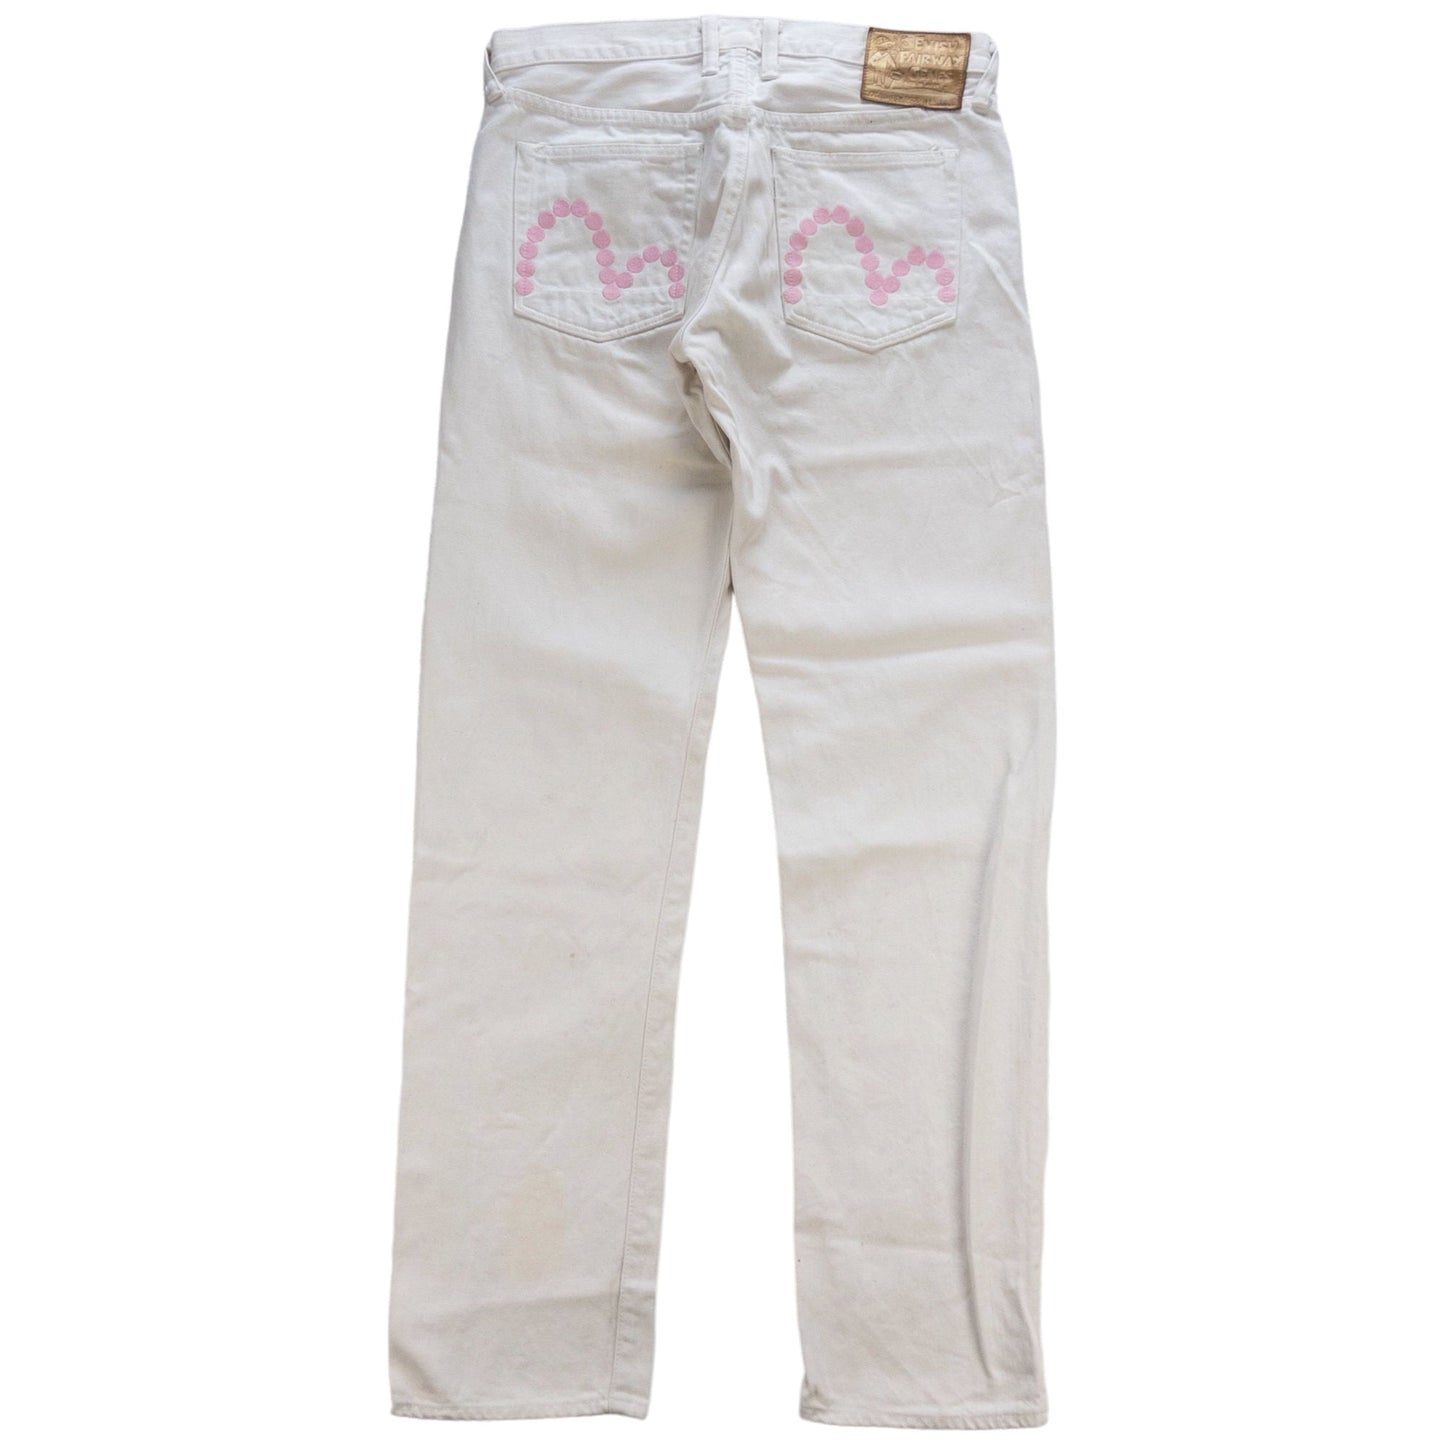 VIntage Evisu Double Gull Japanese Denim Jeans Size W34